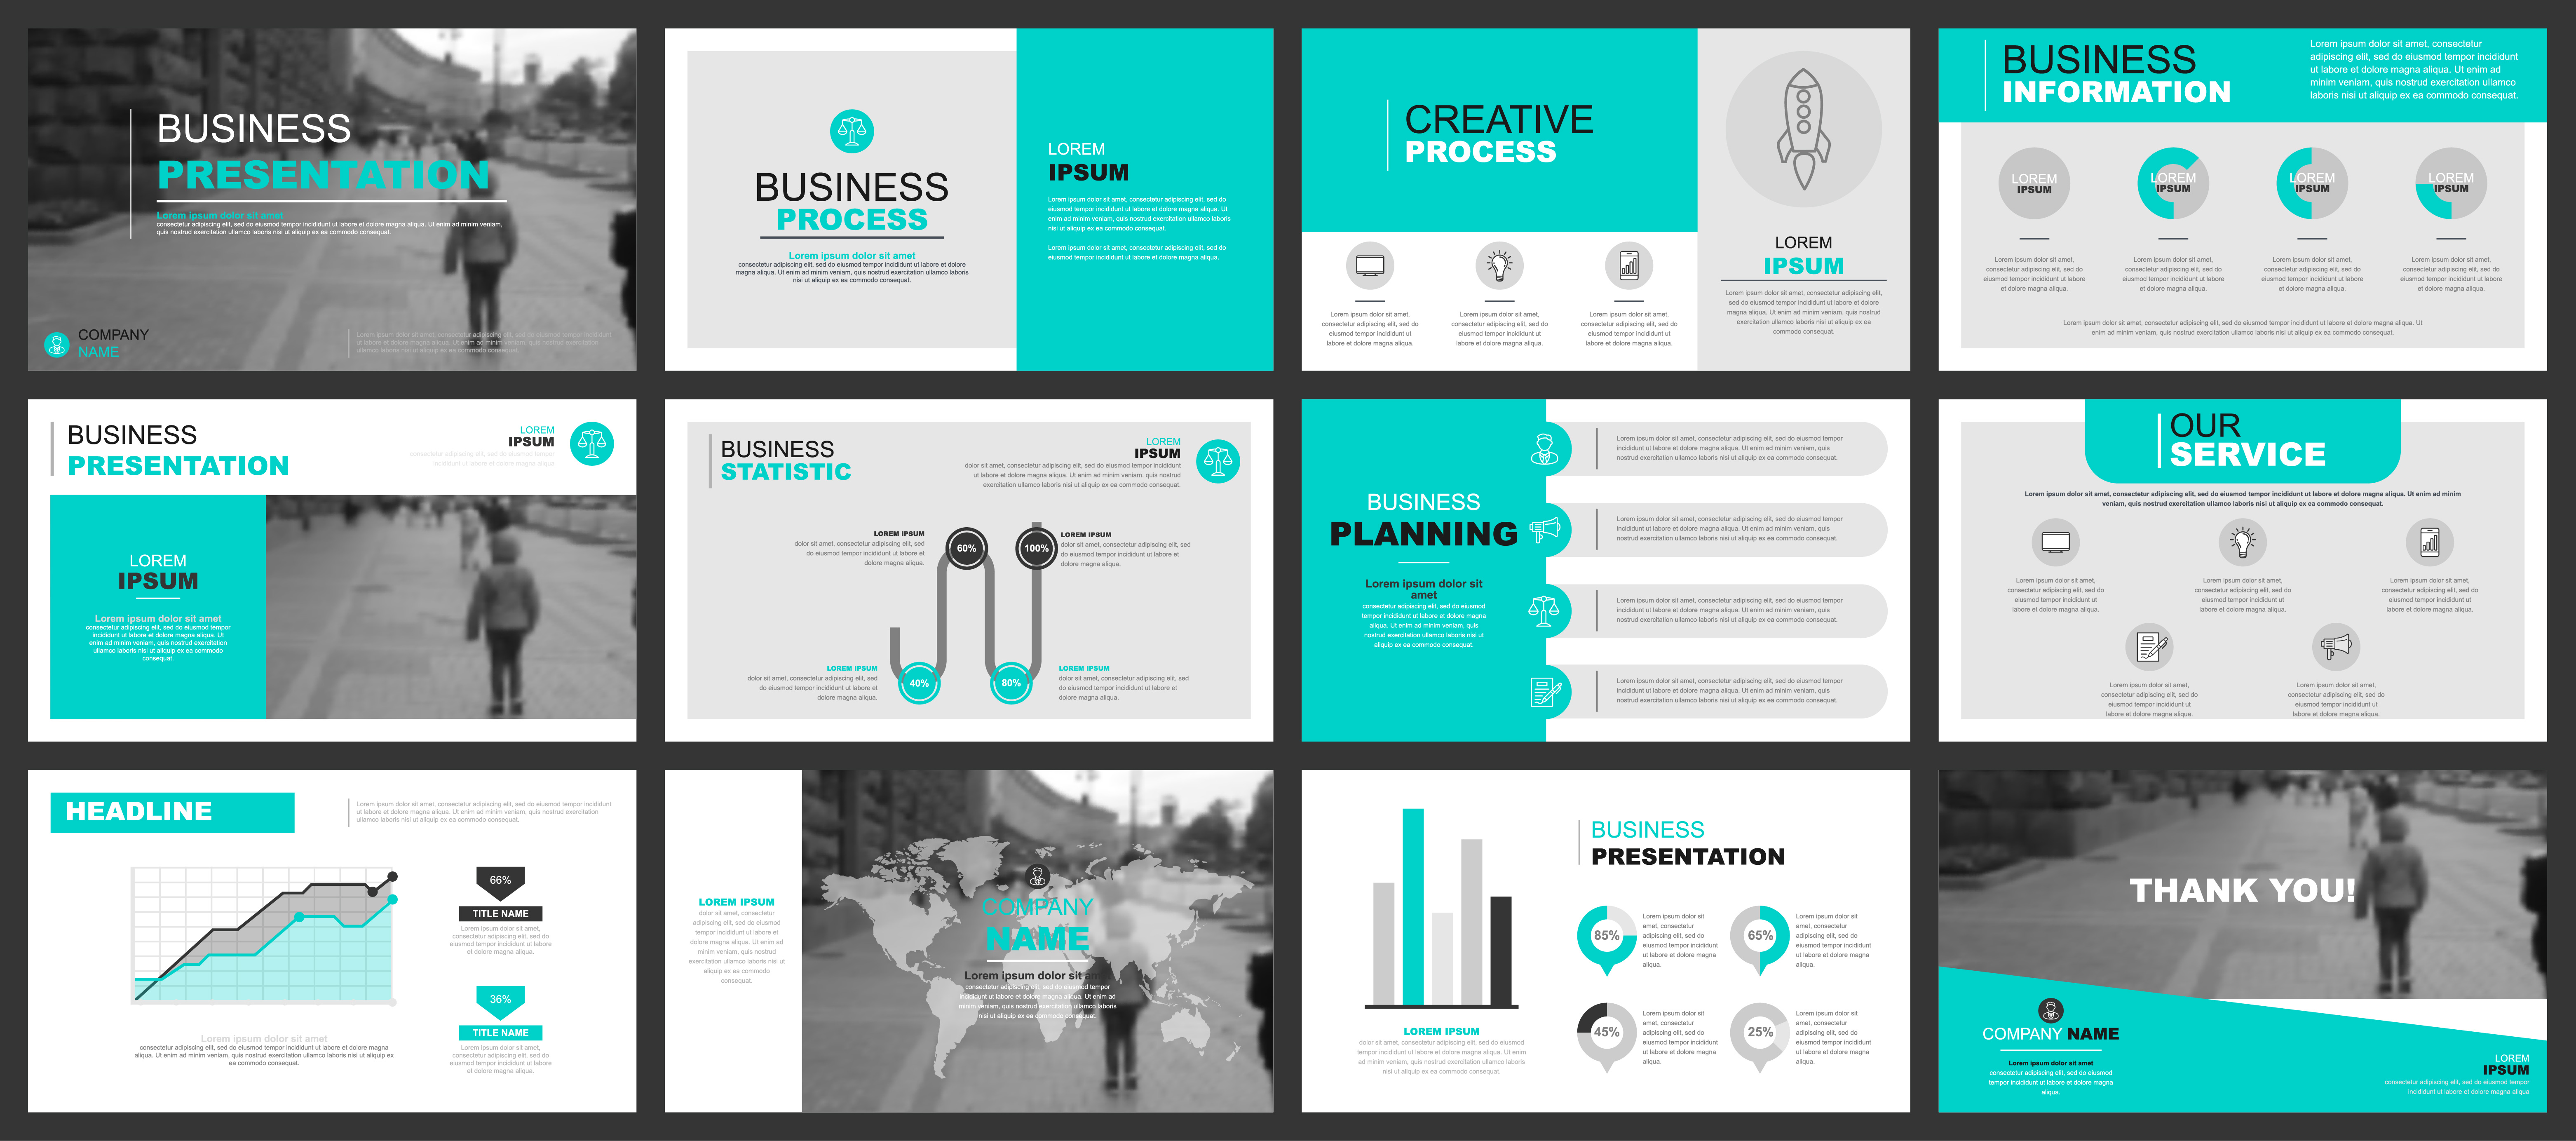 best powerpoint design for business presentation